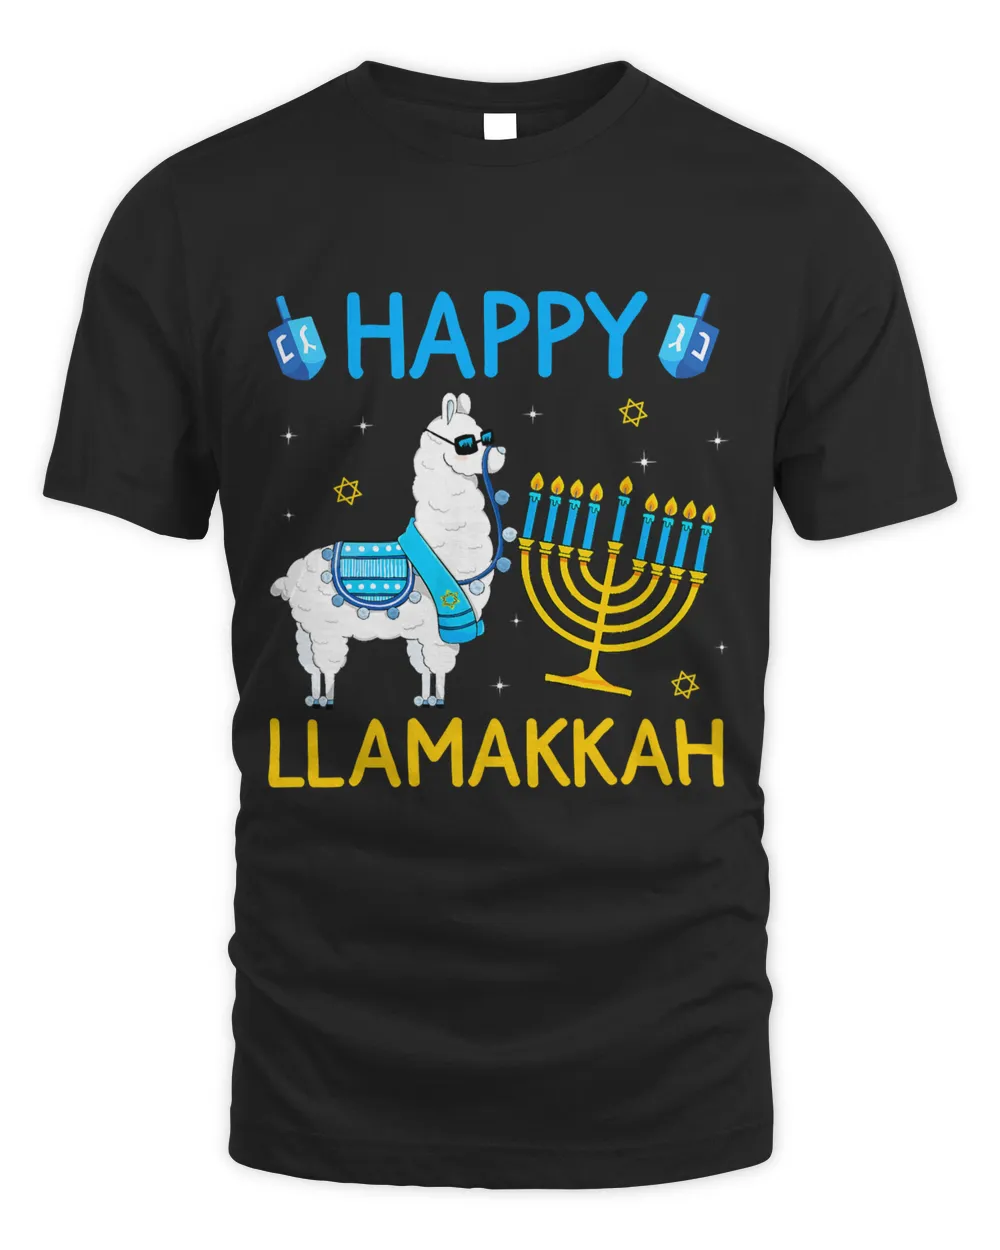 Happy Hanukkah Jewish Christmas Jewish Hanukkah Llamakkah 16